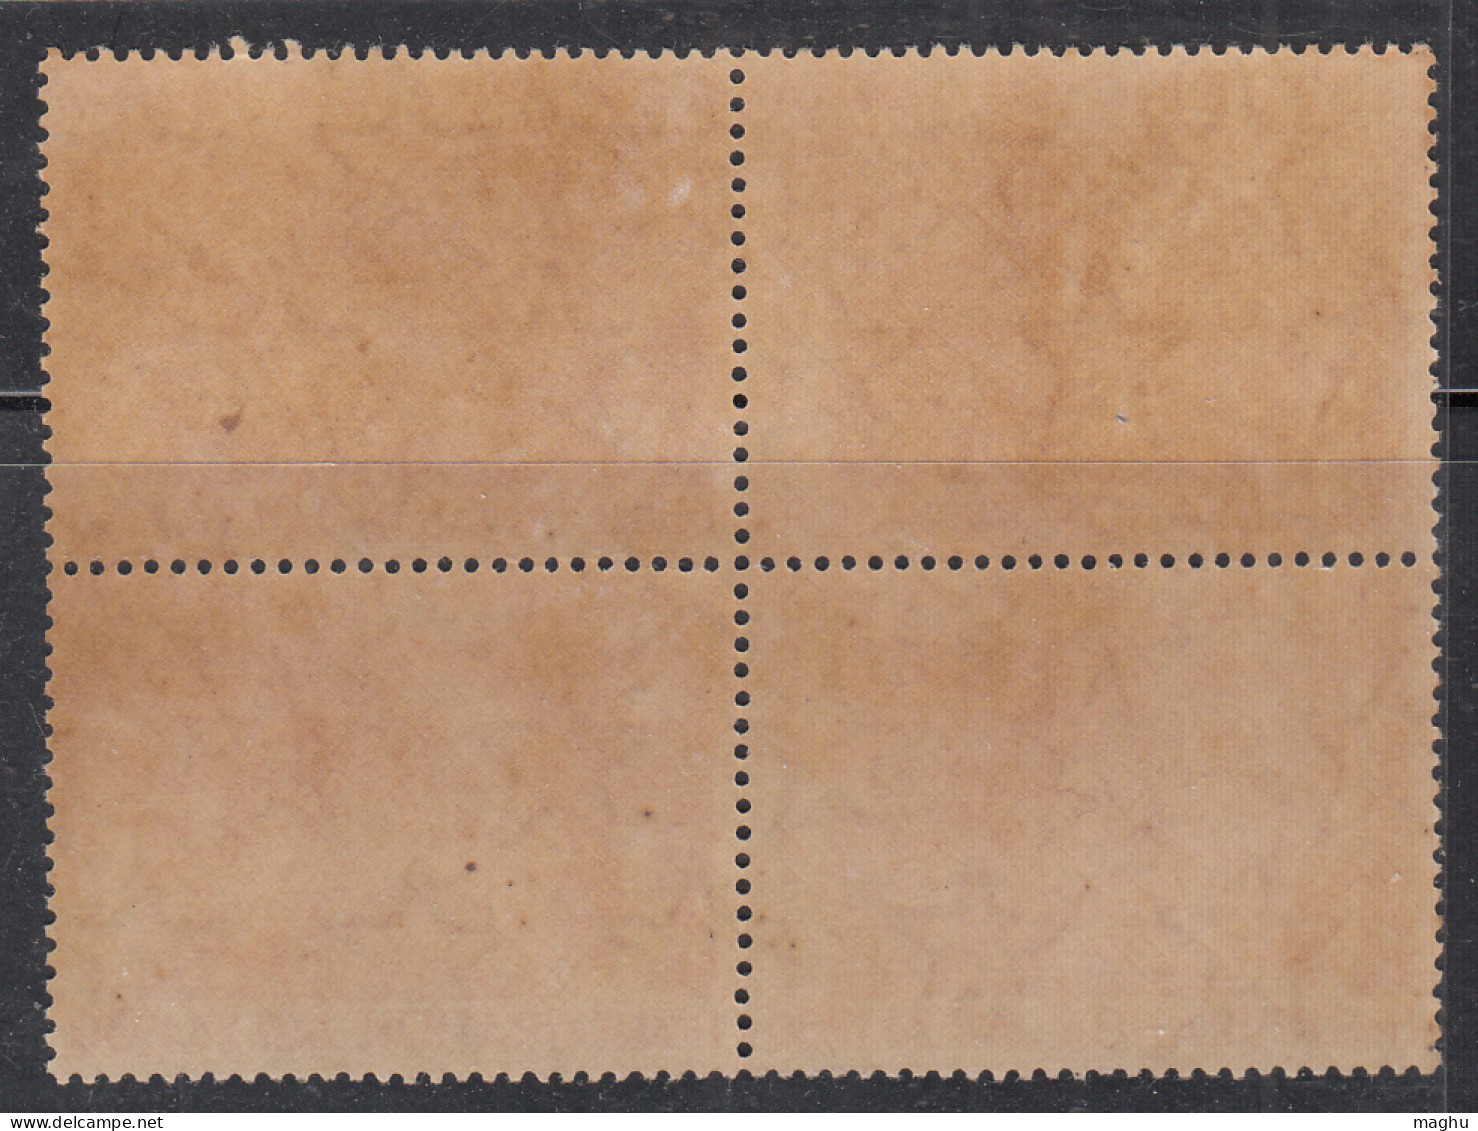 Block Of 4, 2a Republic Inaguration, India MNH 1950, Flag, Music Instrument,  - Blocs-feuillets